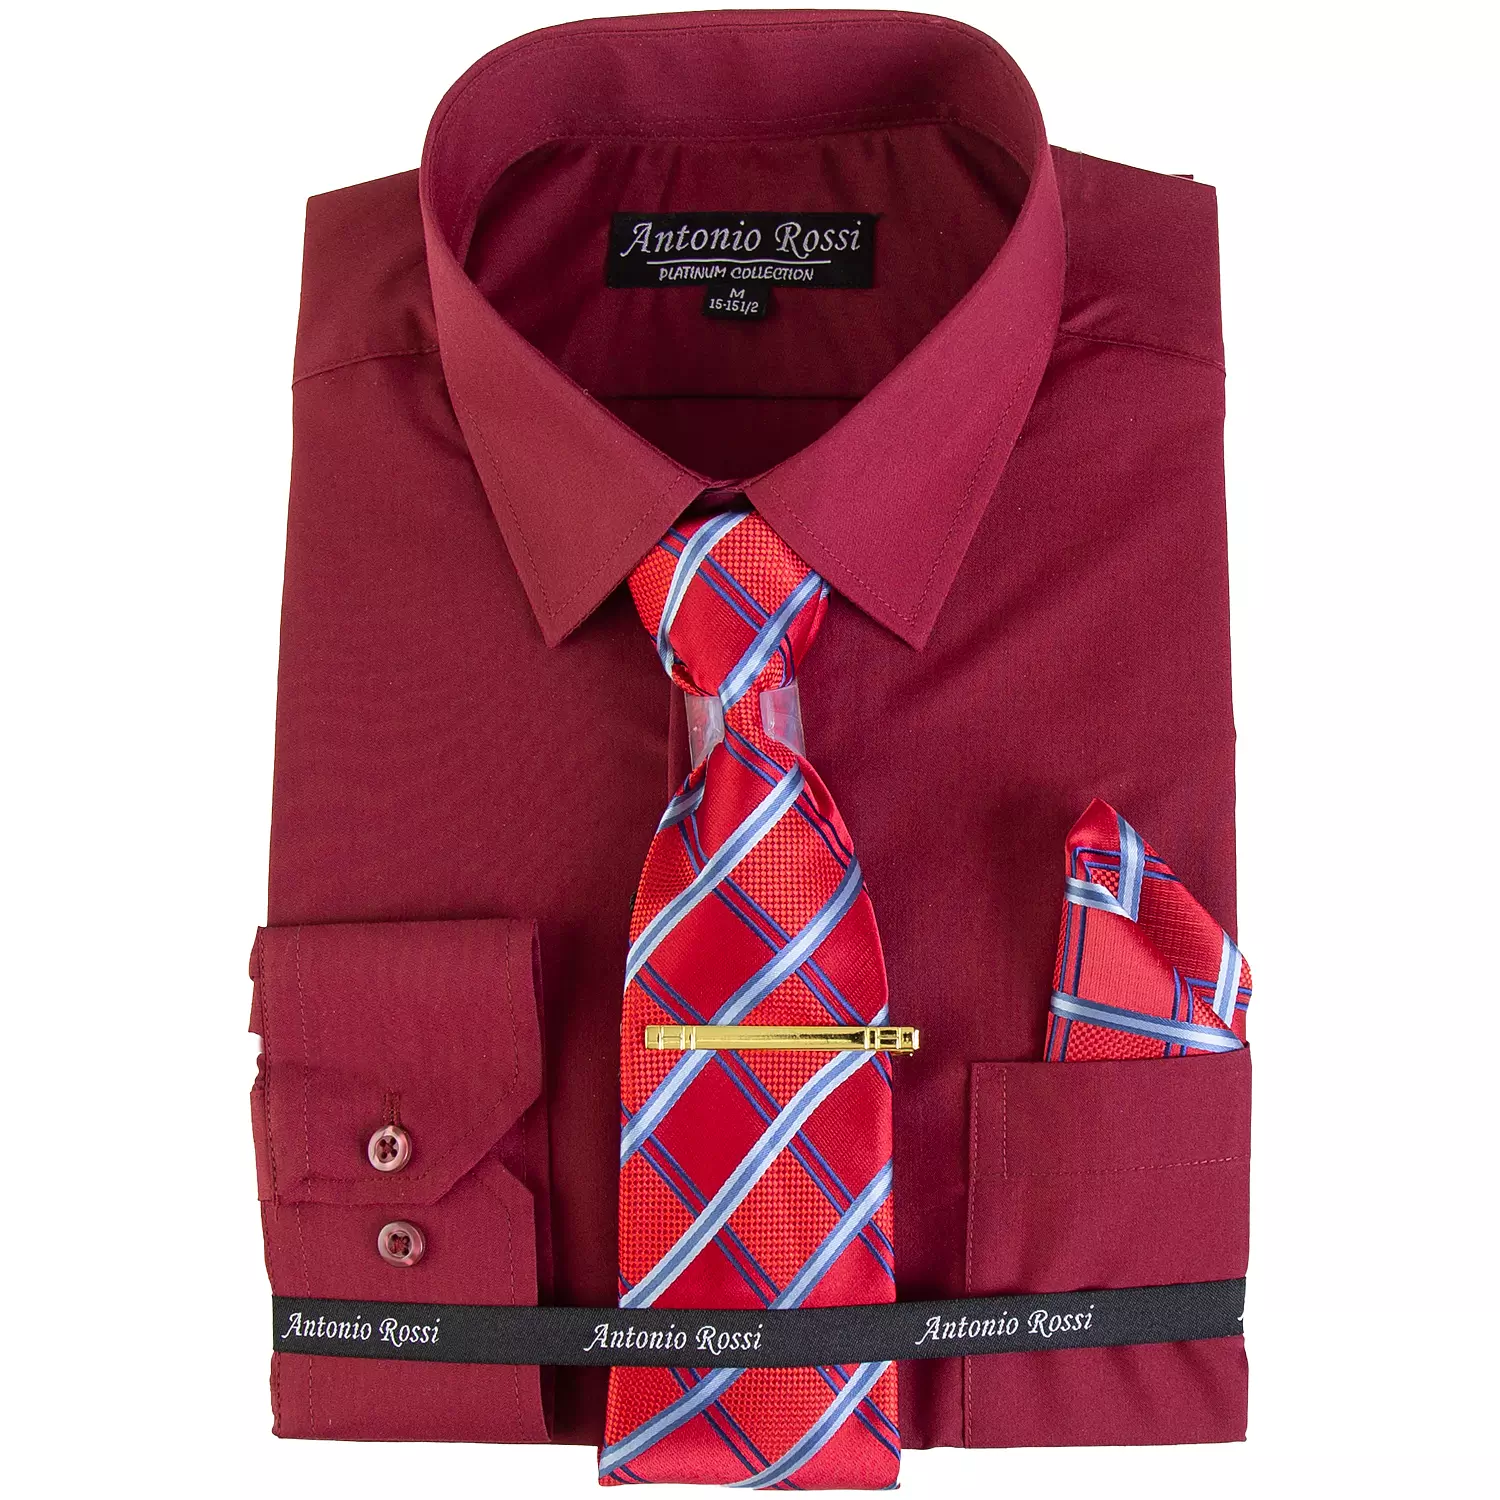 Antonio Rossi - Men's boxed dress shirt with tie, tie clip and hankerchief, burgundy shirt, 15-15.5